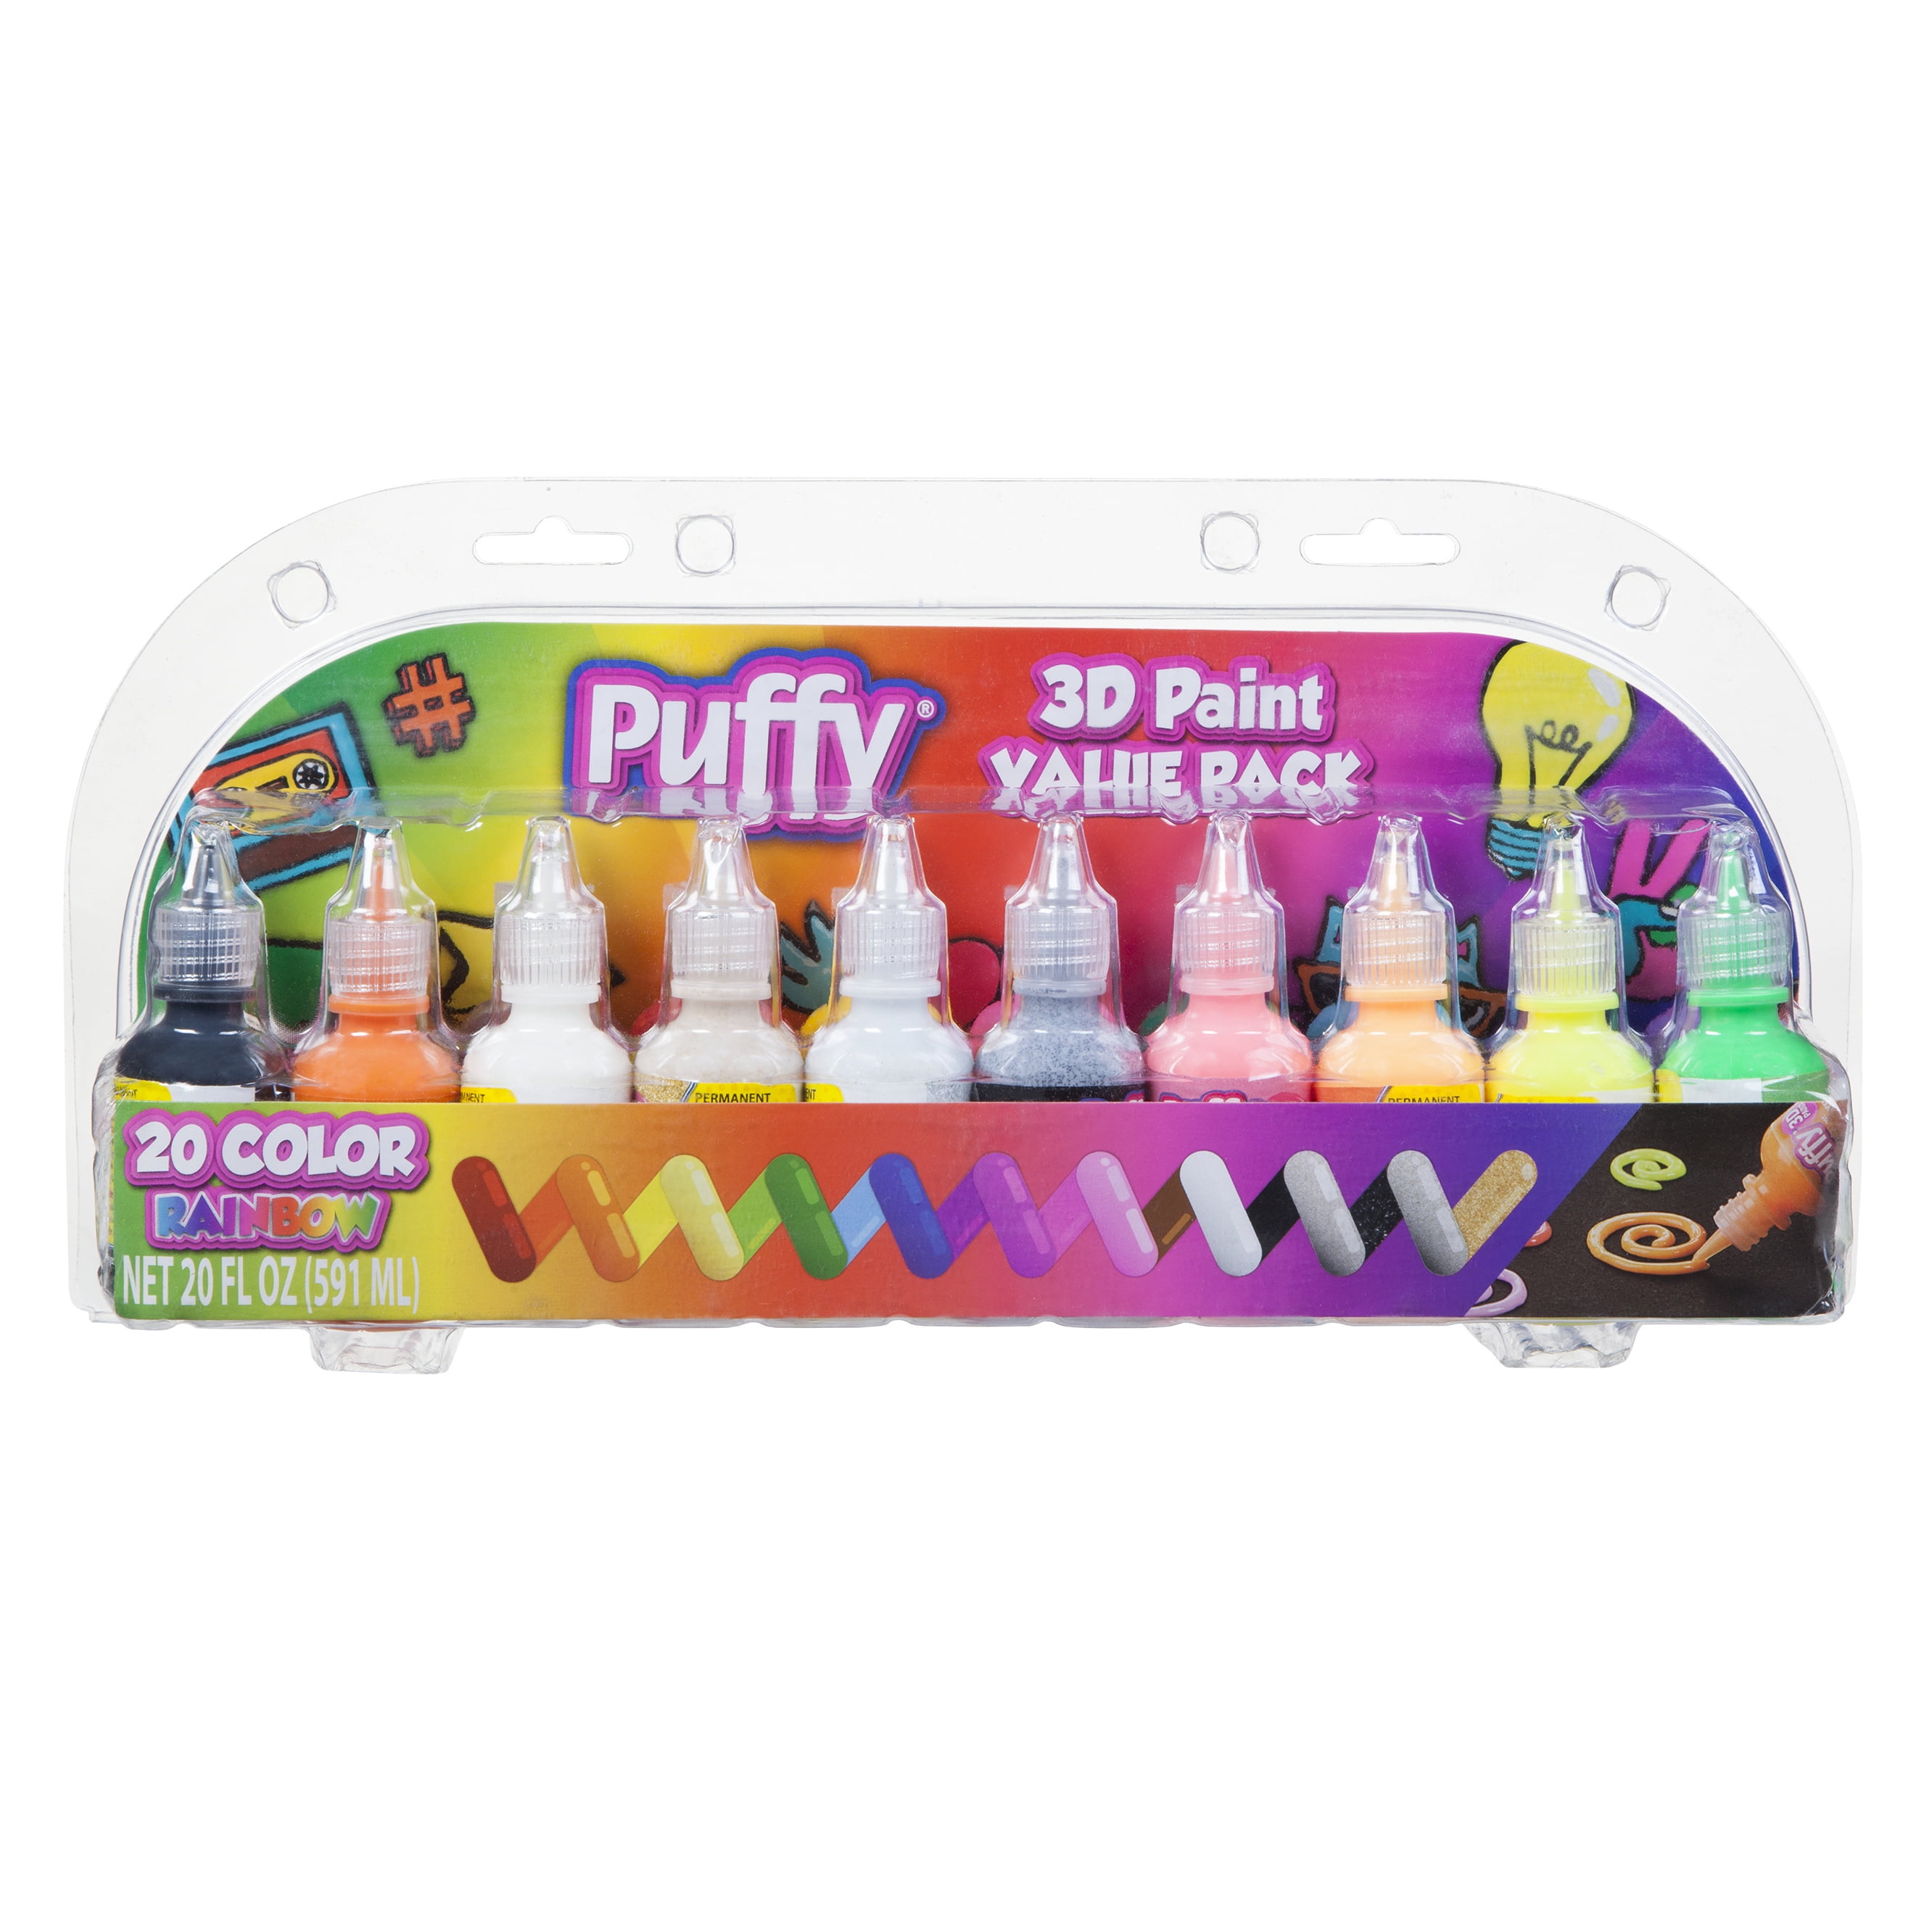 Puffy 1 fl oz 3D Paint Value Pack 20 Color Rainbow